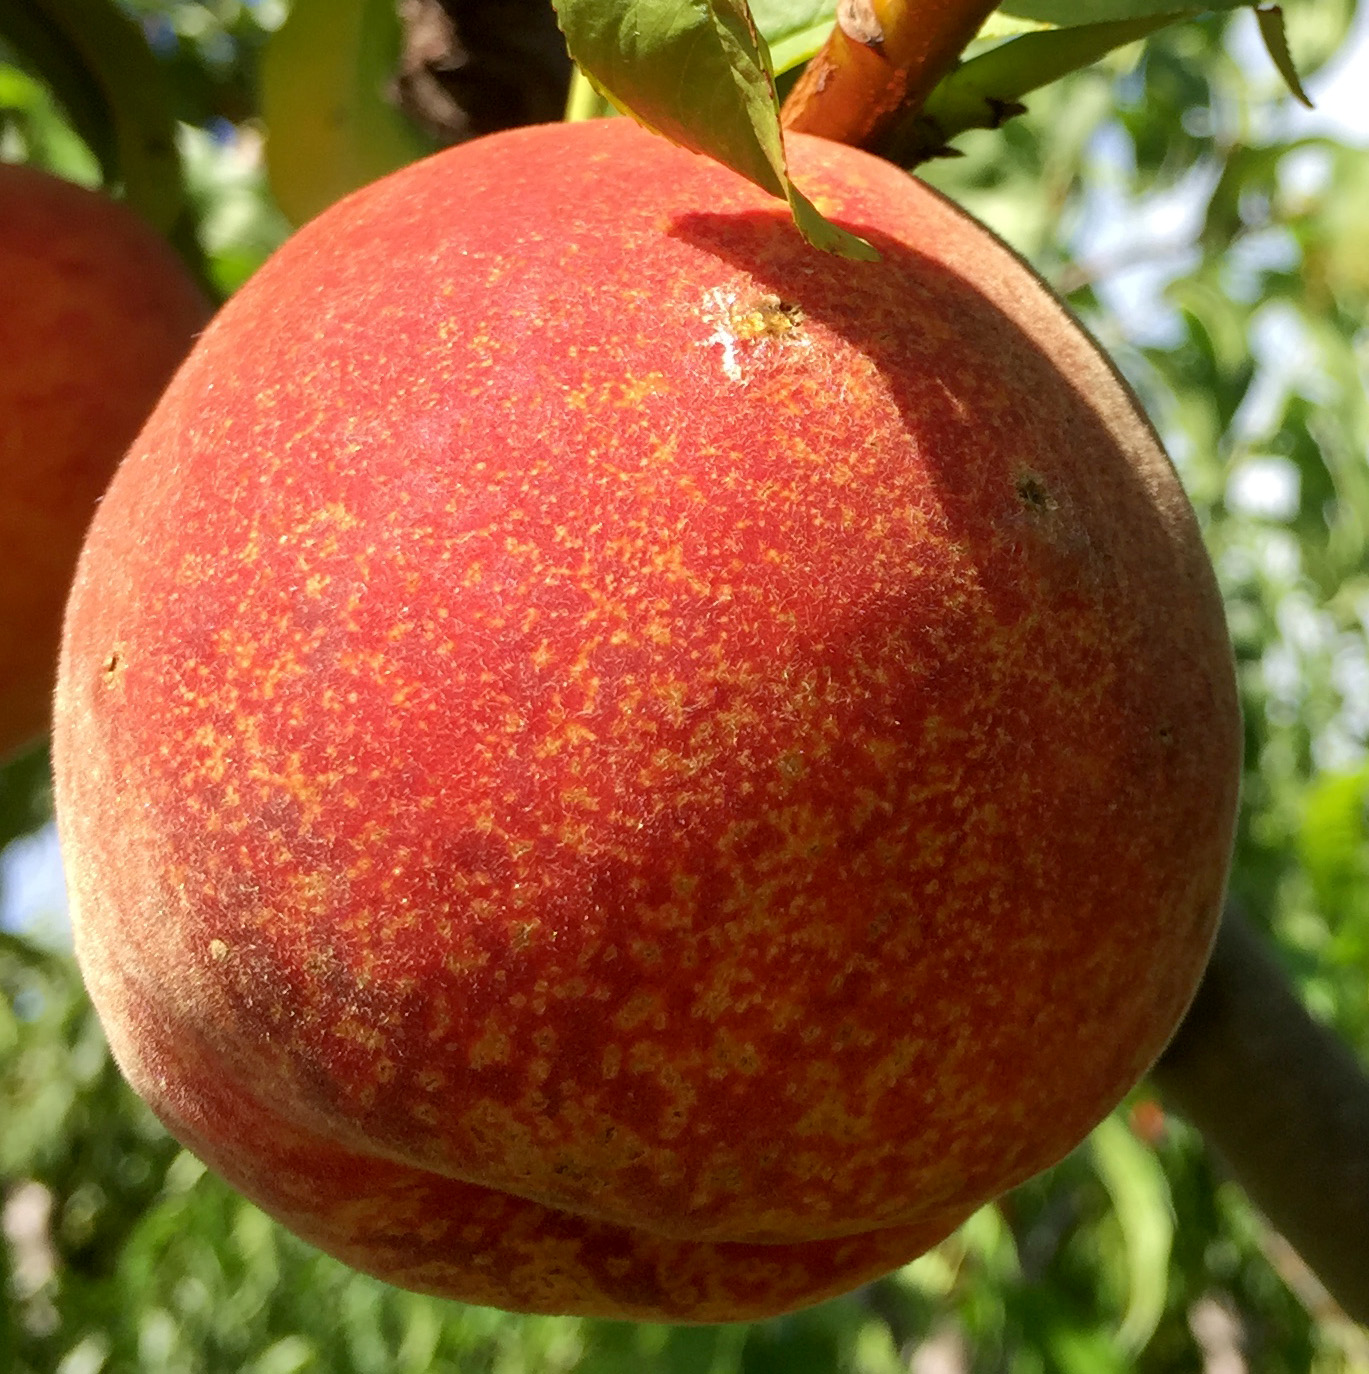 Bacterial spot on peach